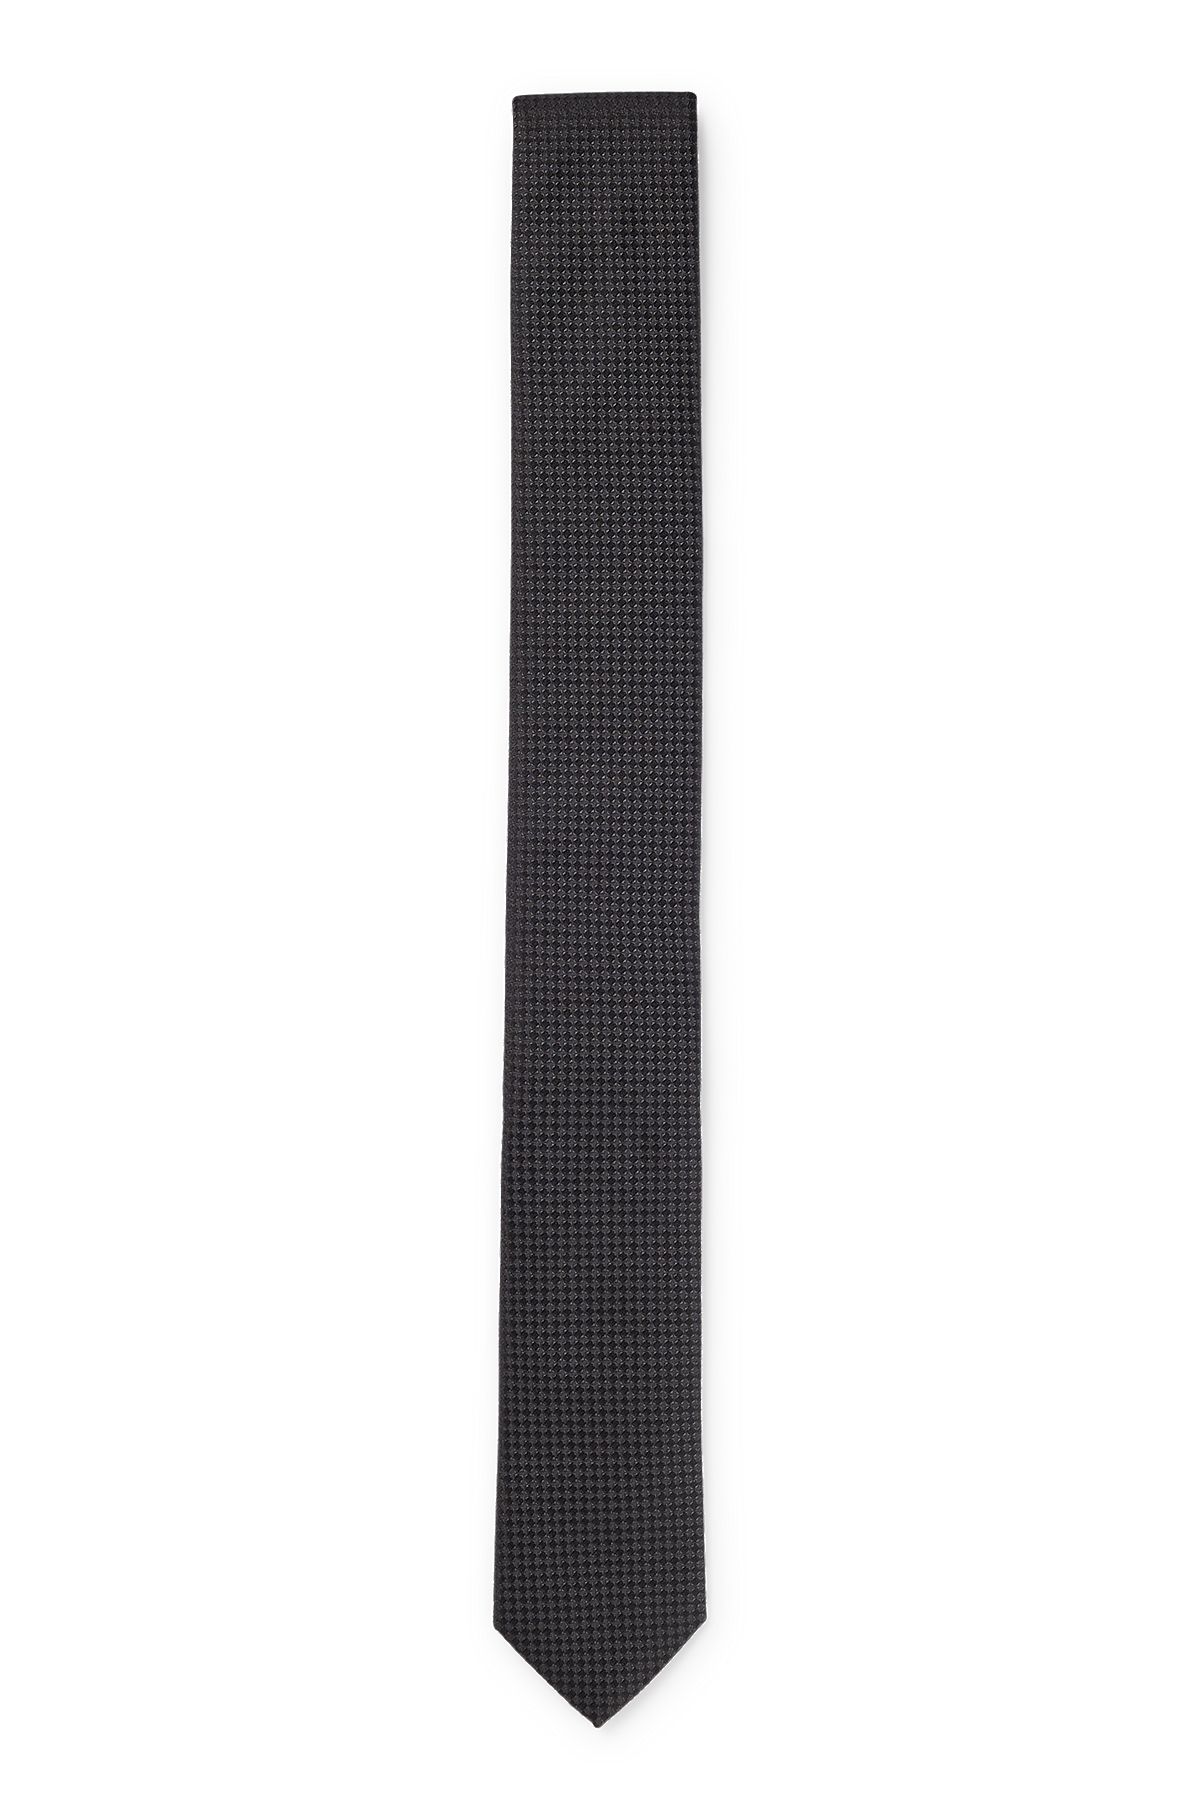 Krawatte aus Seiden-Jacquard mit filigranem Muster, Schwarz